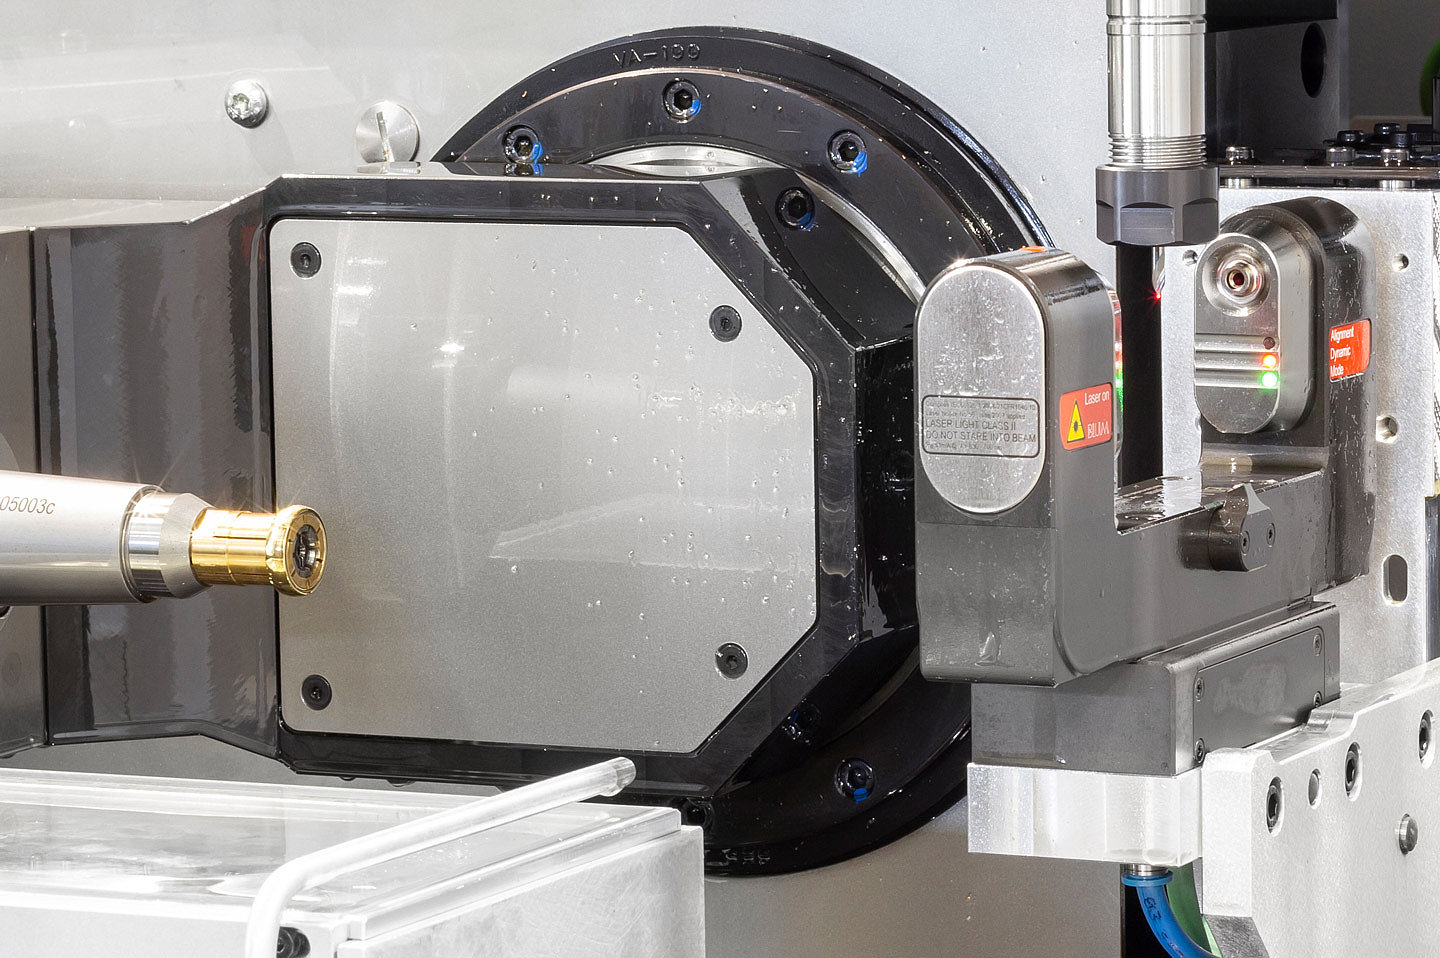 BLUM laser measuring system measures a tool.